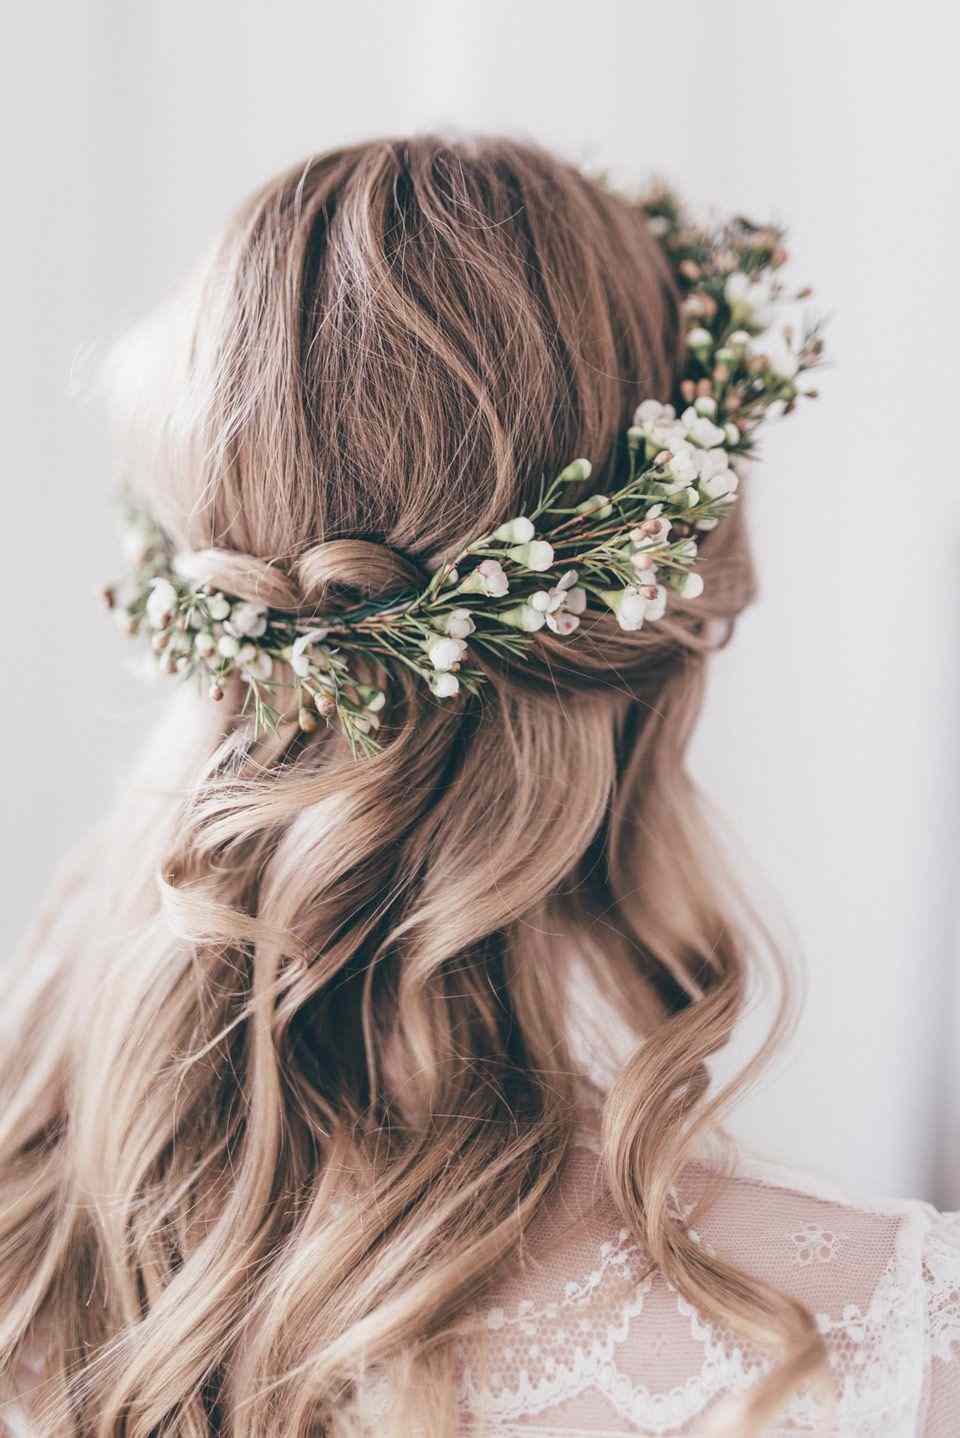 Simple dirndl hairstyles flower wreath hairstyle ideas easy